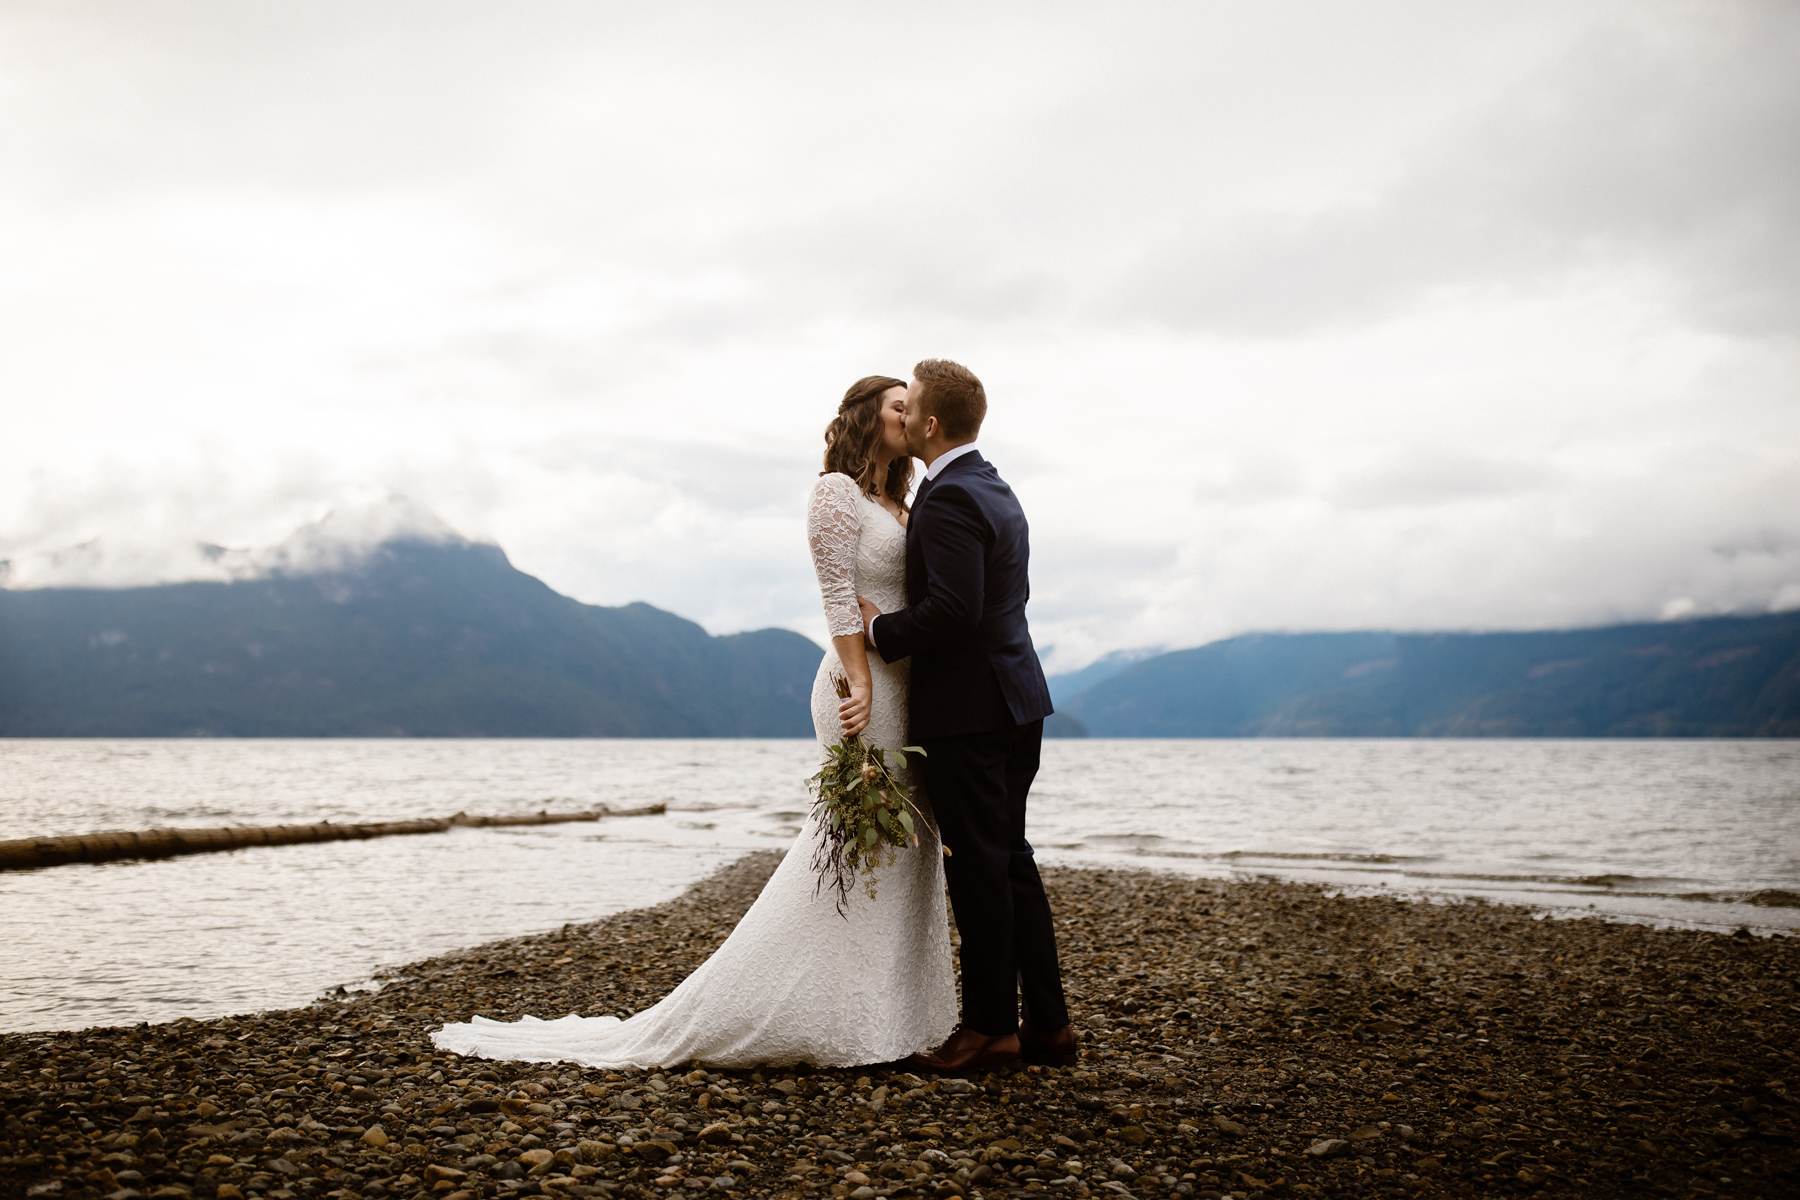 Squamish Wedding Photographers at an Adventurous Elopement - Image 14